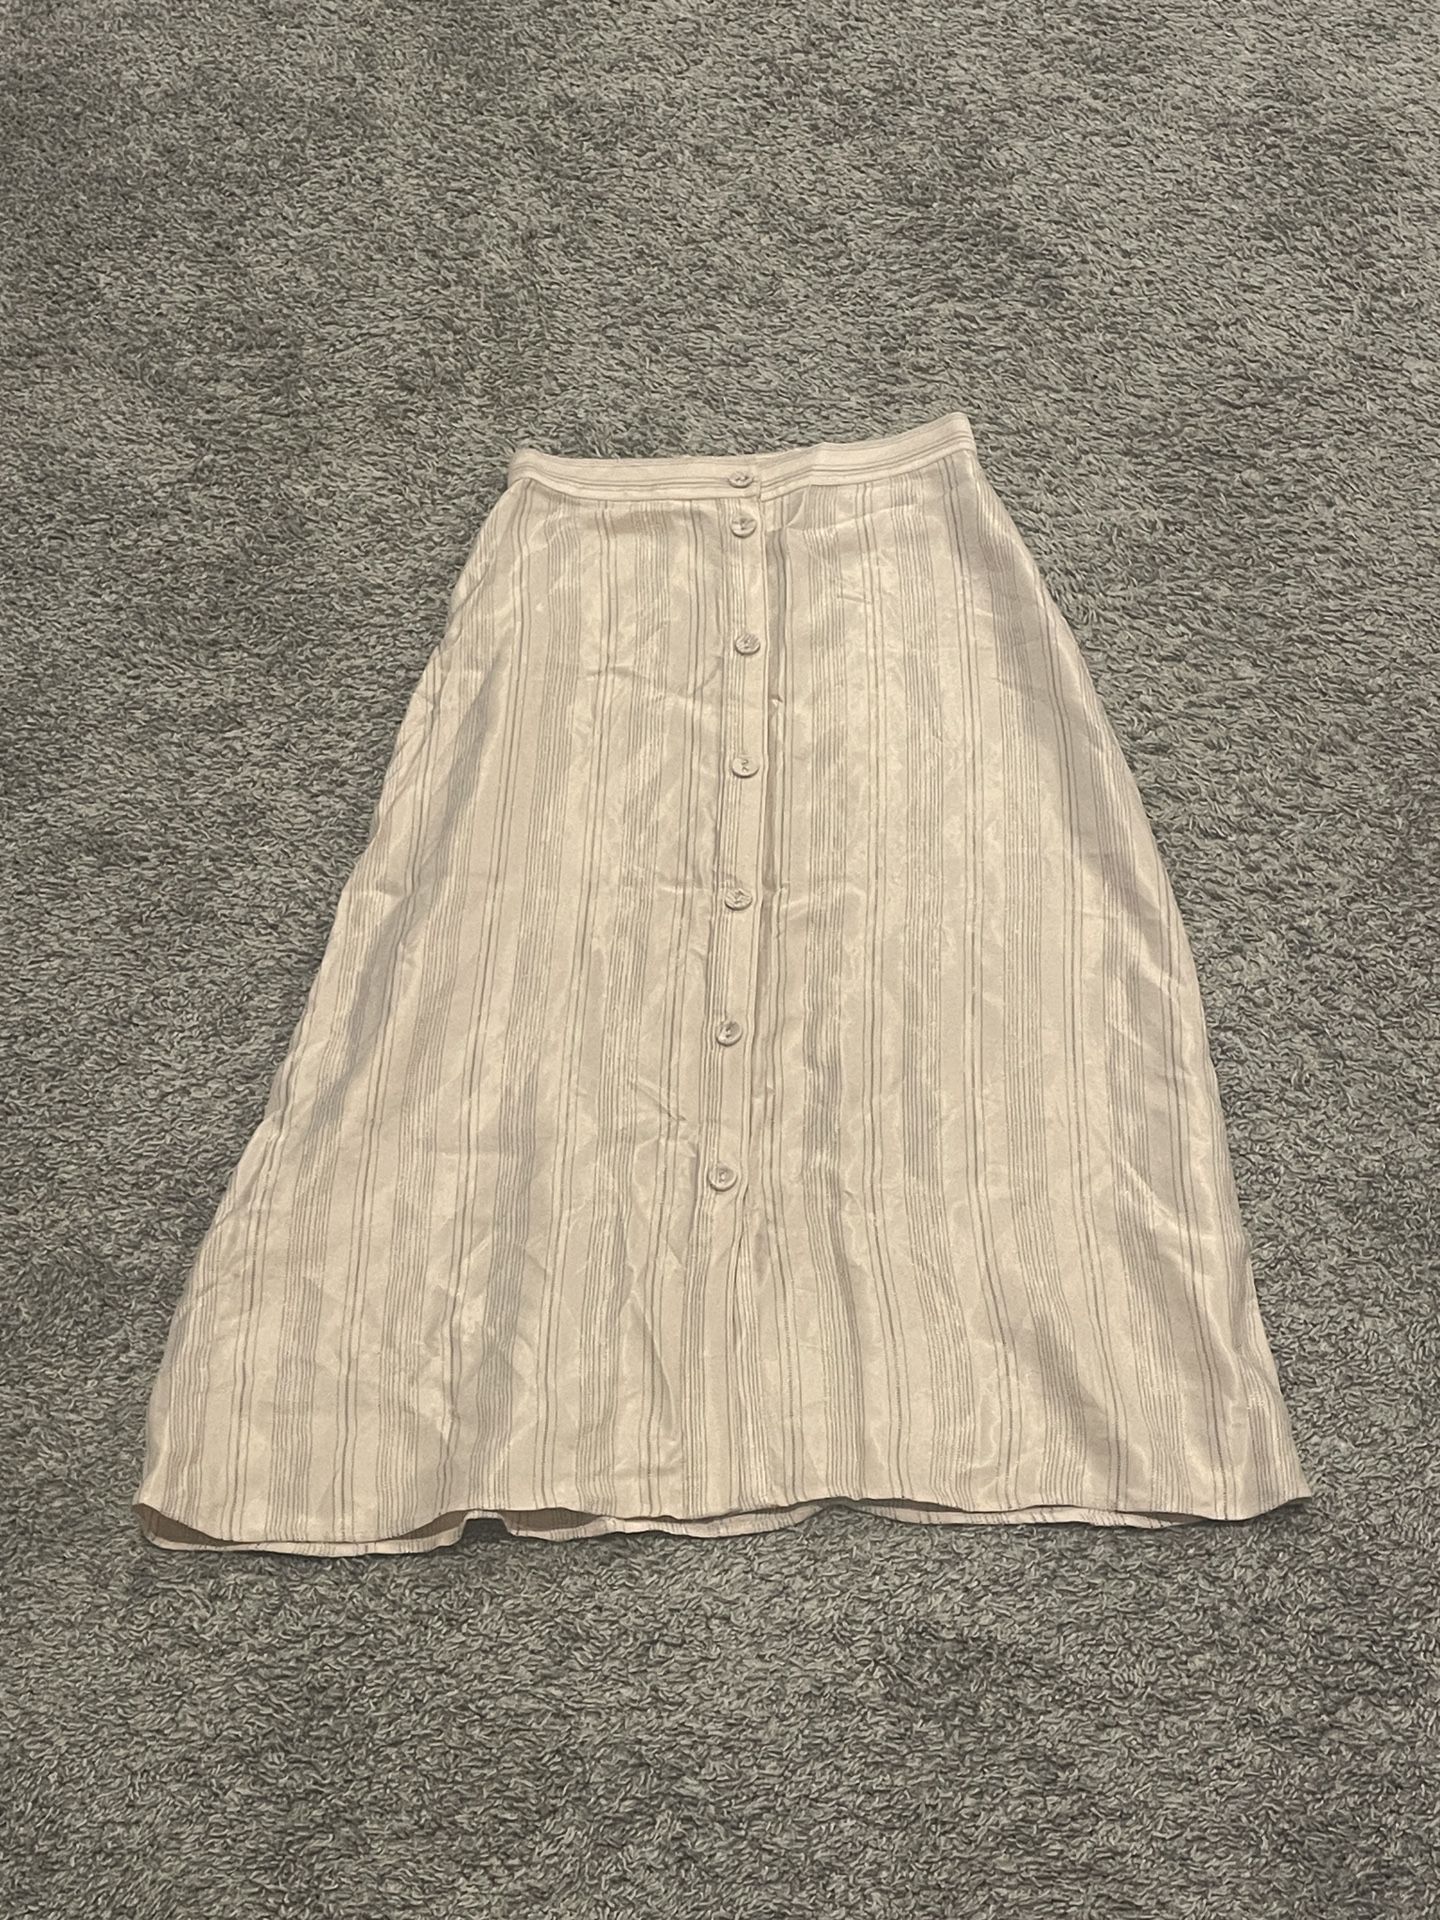 H&M Cream Silk Midi Skirt Size 0